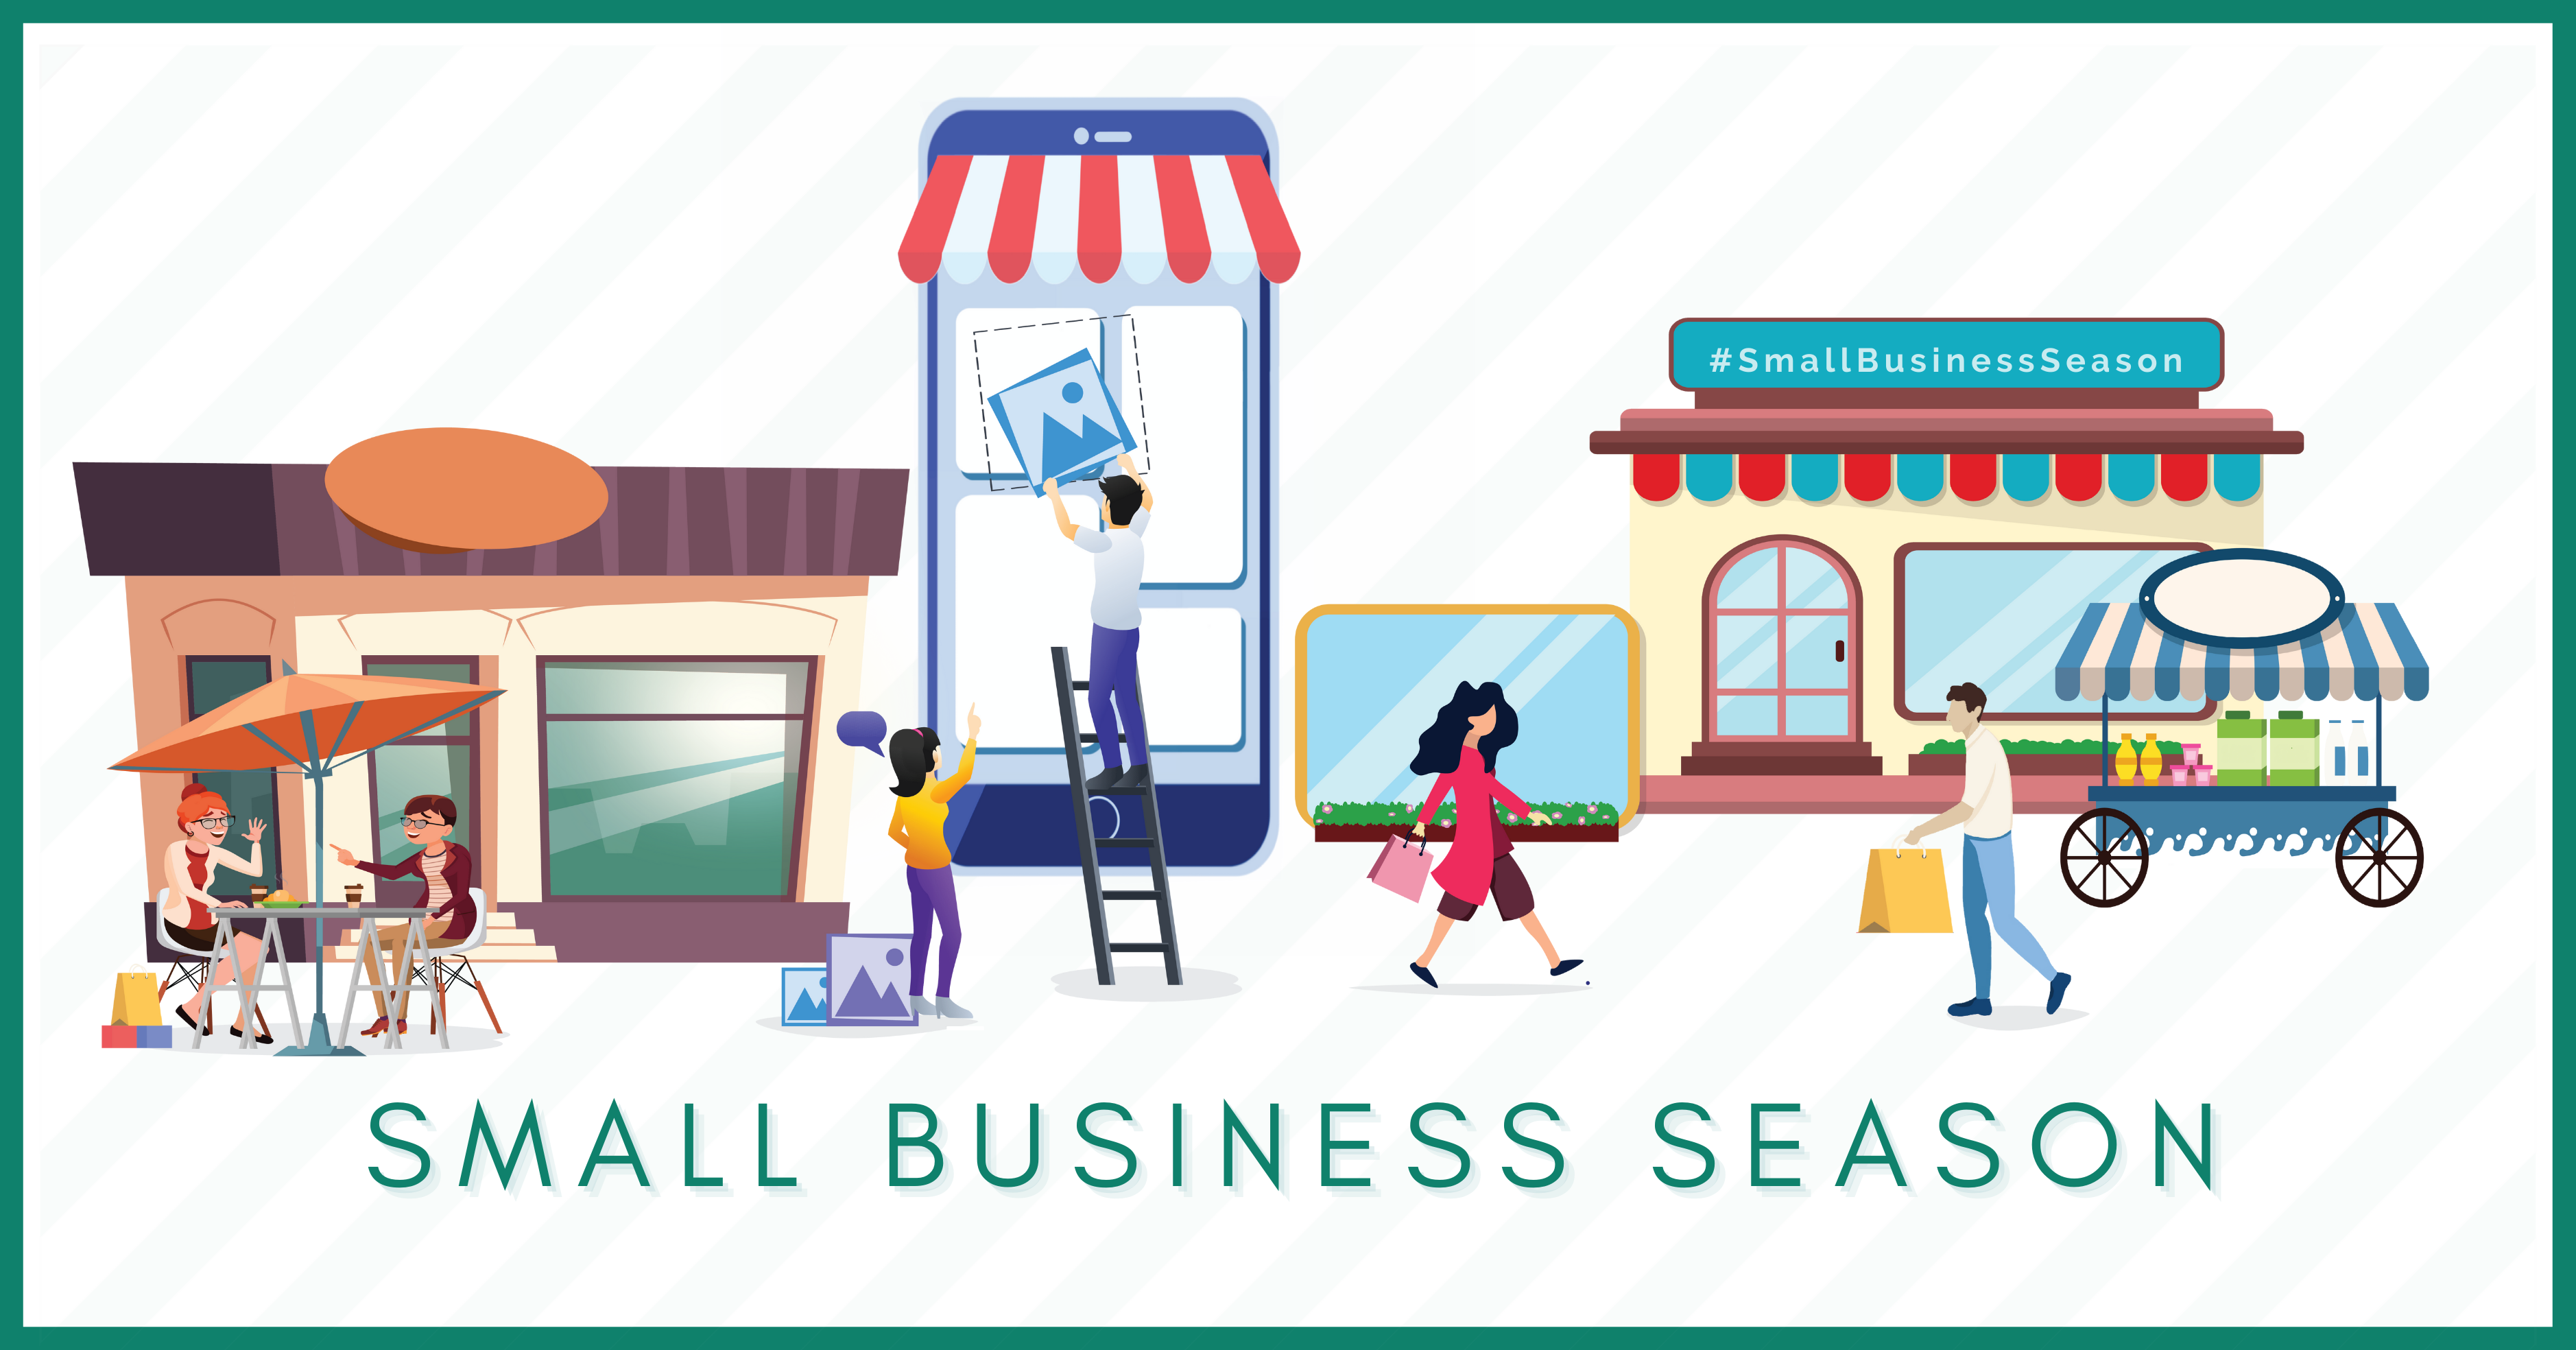 Celebrating Small Business Season